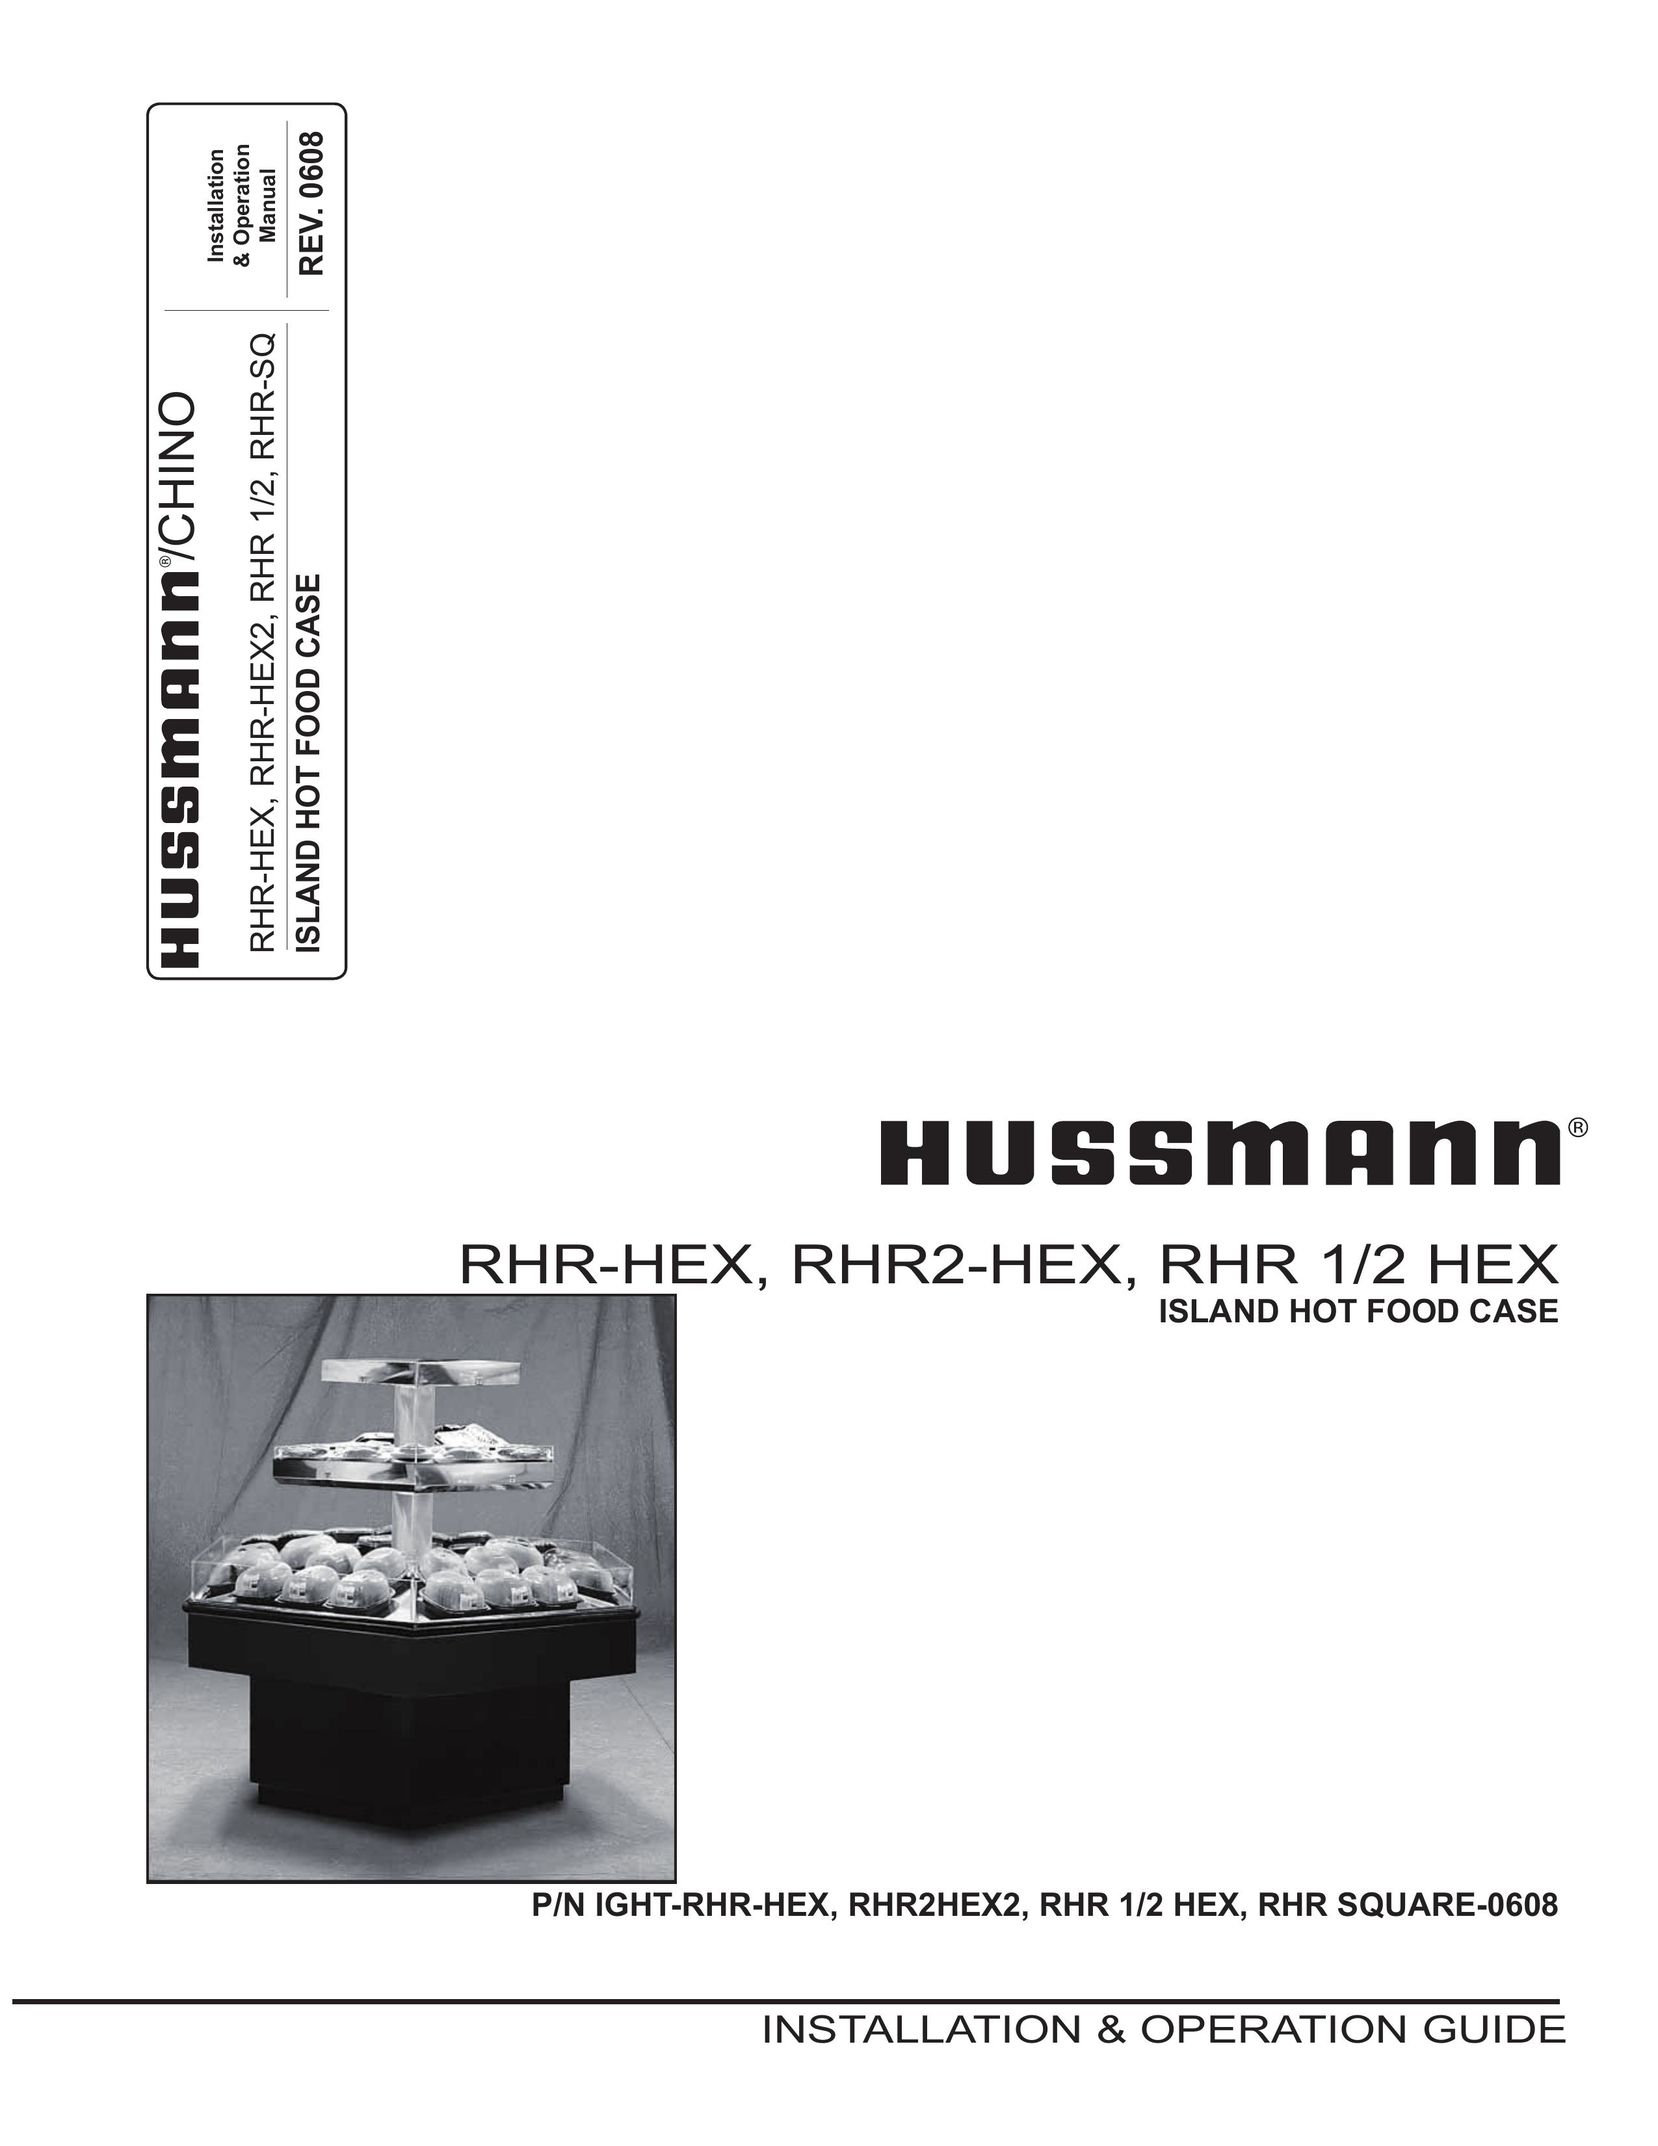 hussman RHR 1/2 HEX Food Warmer User Manual